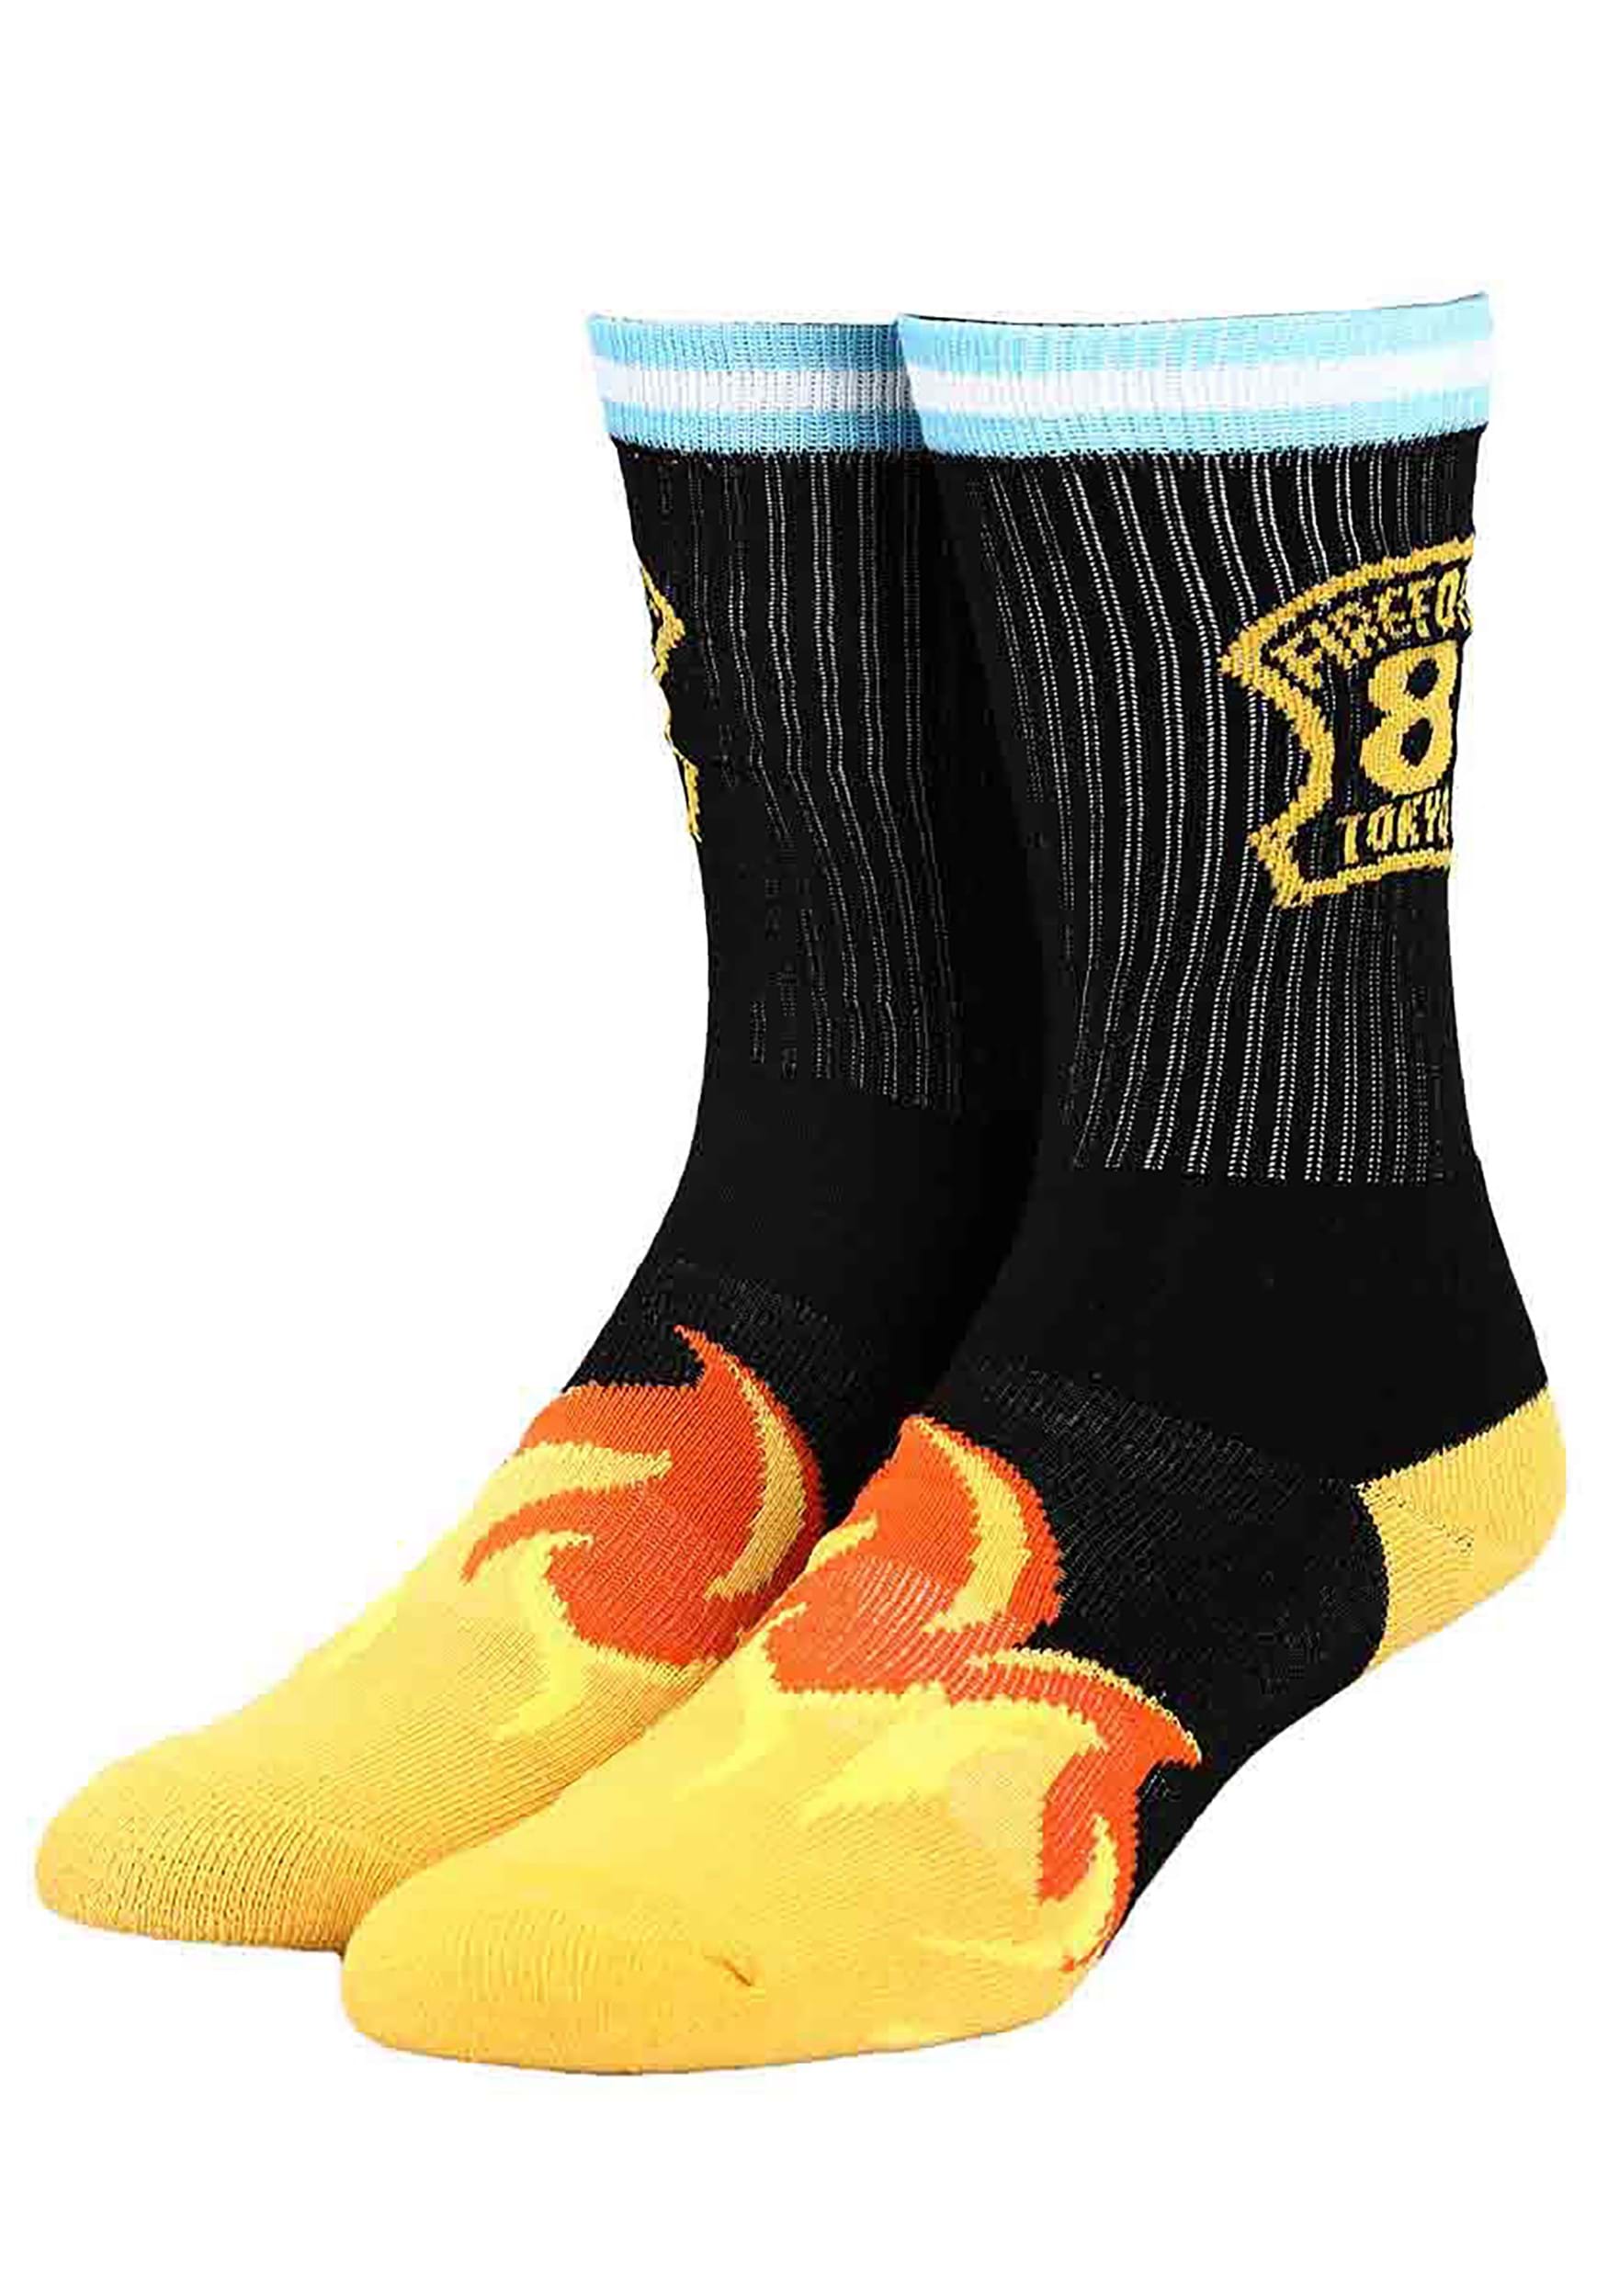 Flaming Fire Force Crew Socks